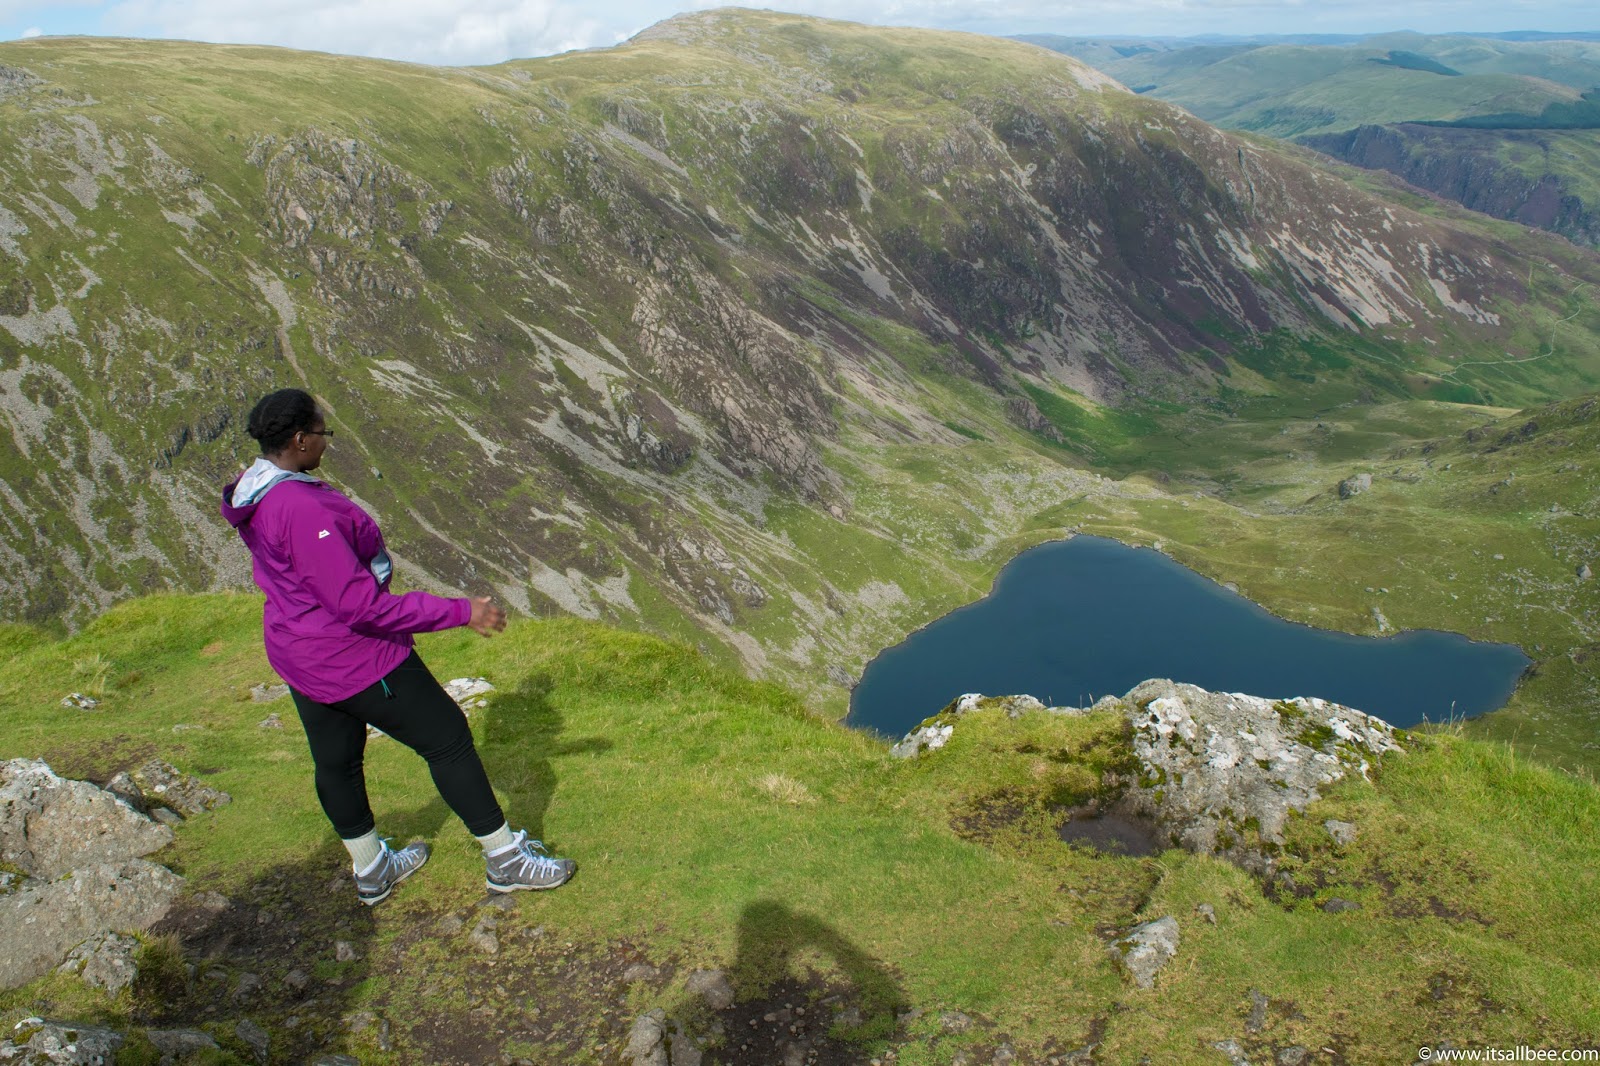 Climbing Snowdonia - 30 Of The Best Weekend Getaways In UK